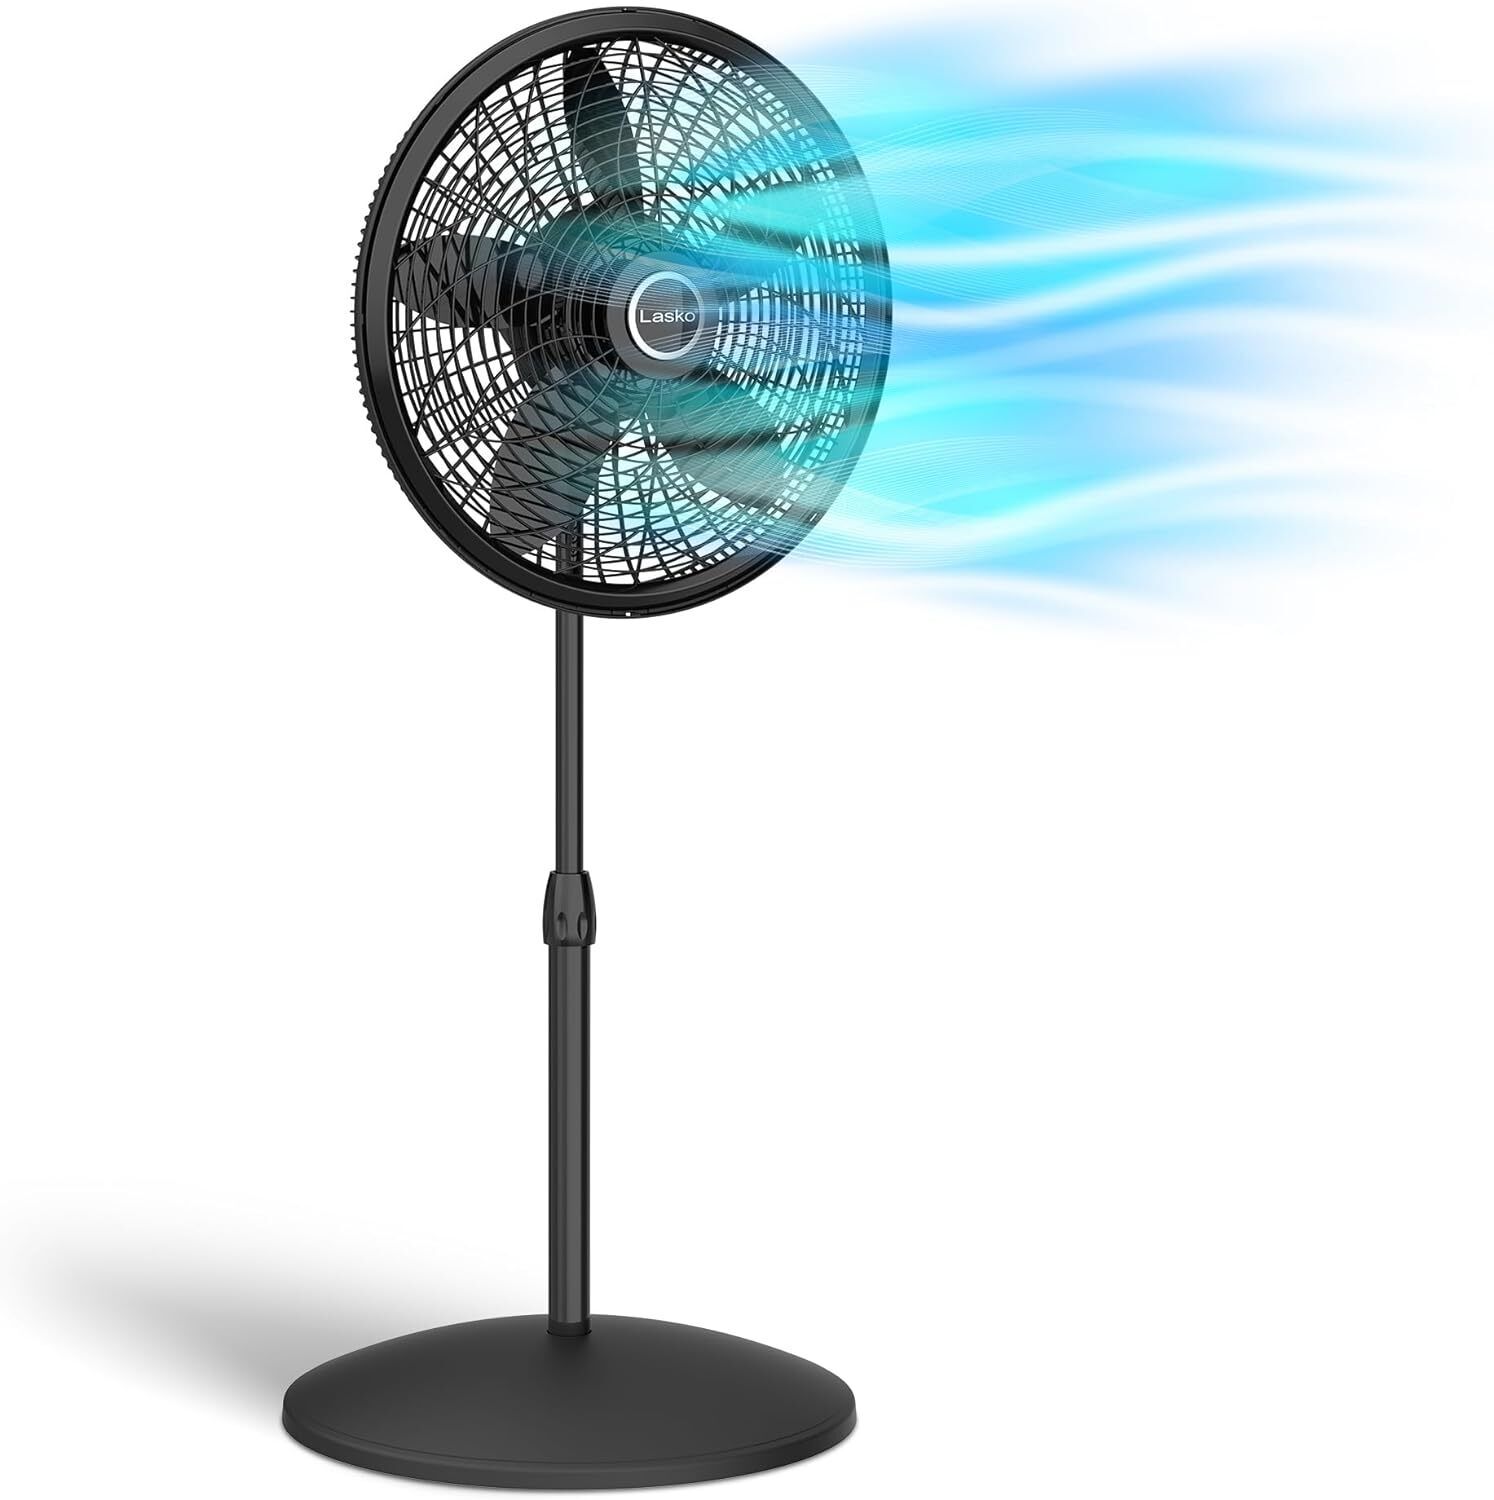 Oscillating Pedestal Fan, Adjustable Height, 3 Speeds, for Bedroom, Living Room